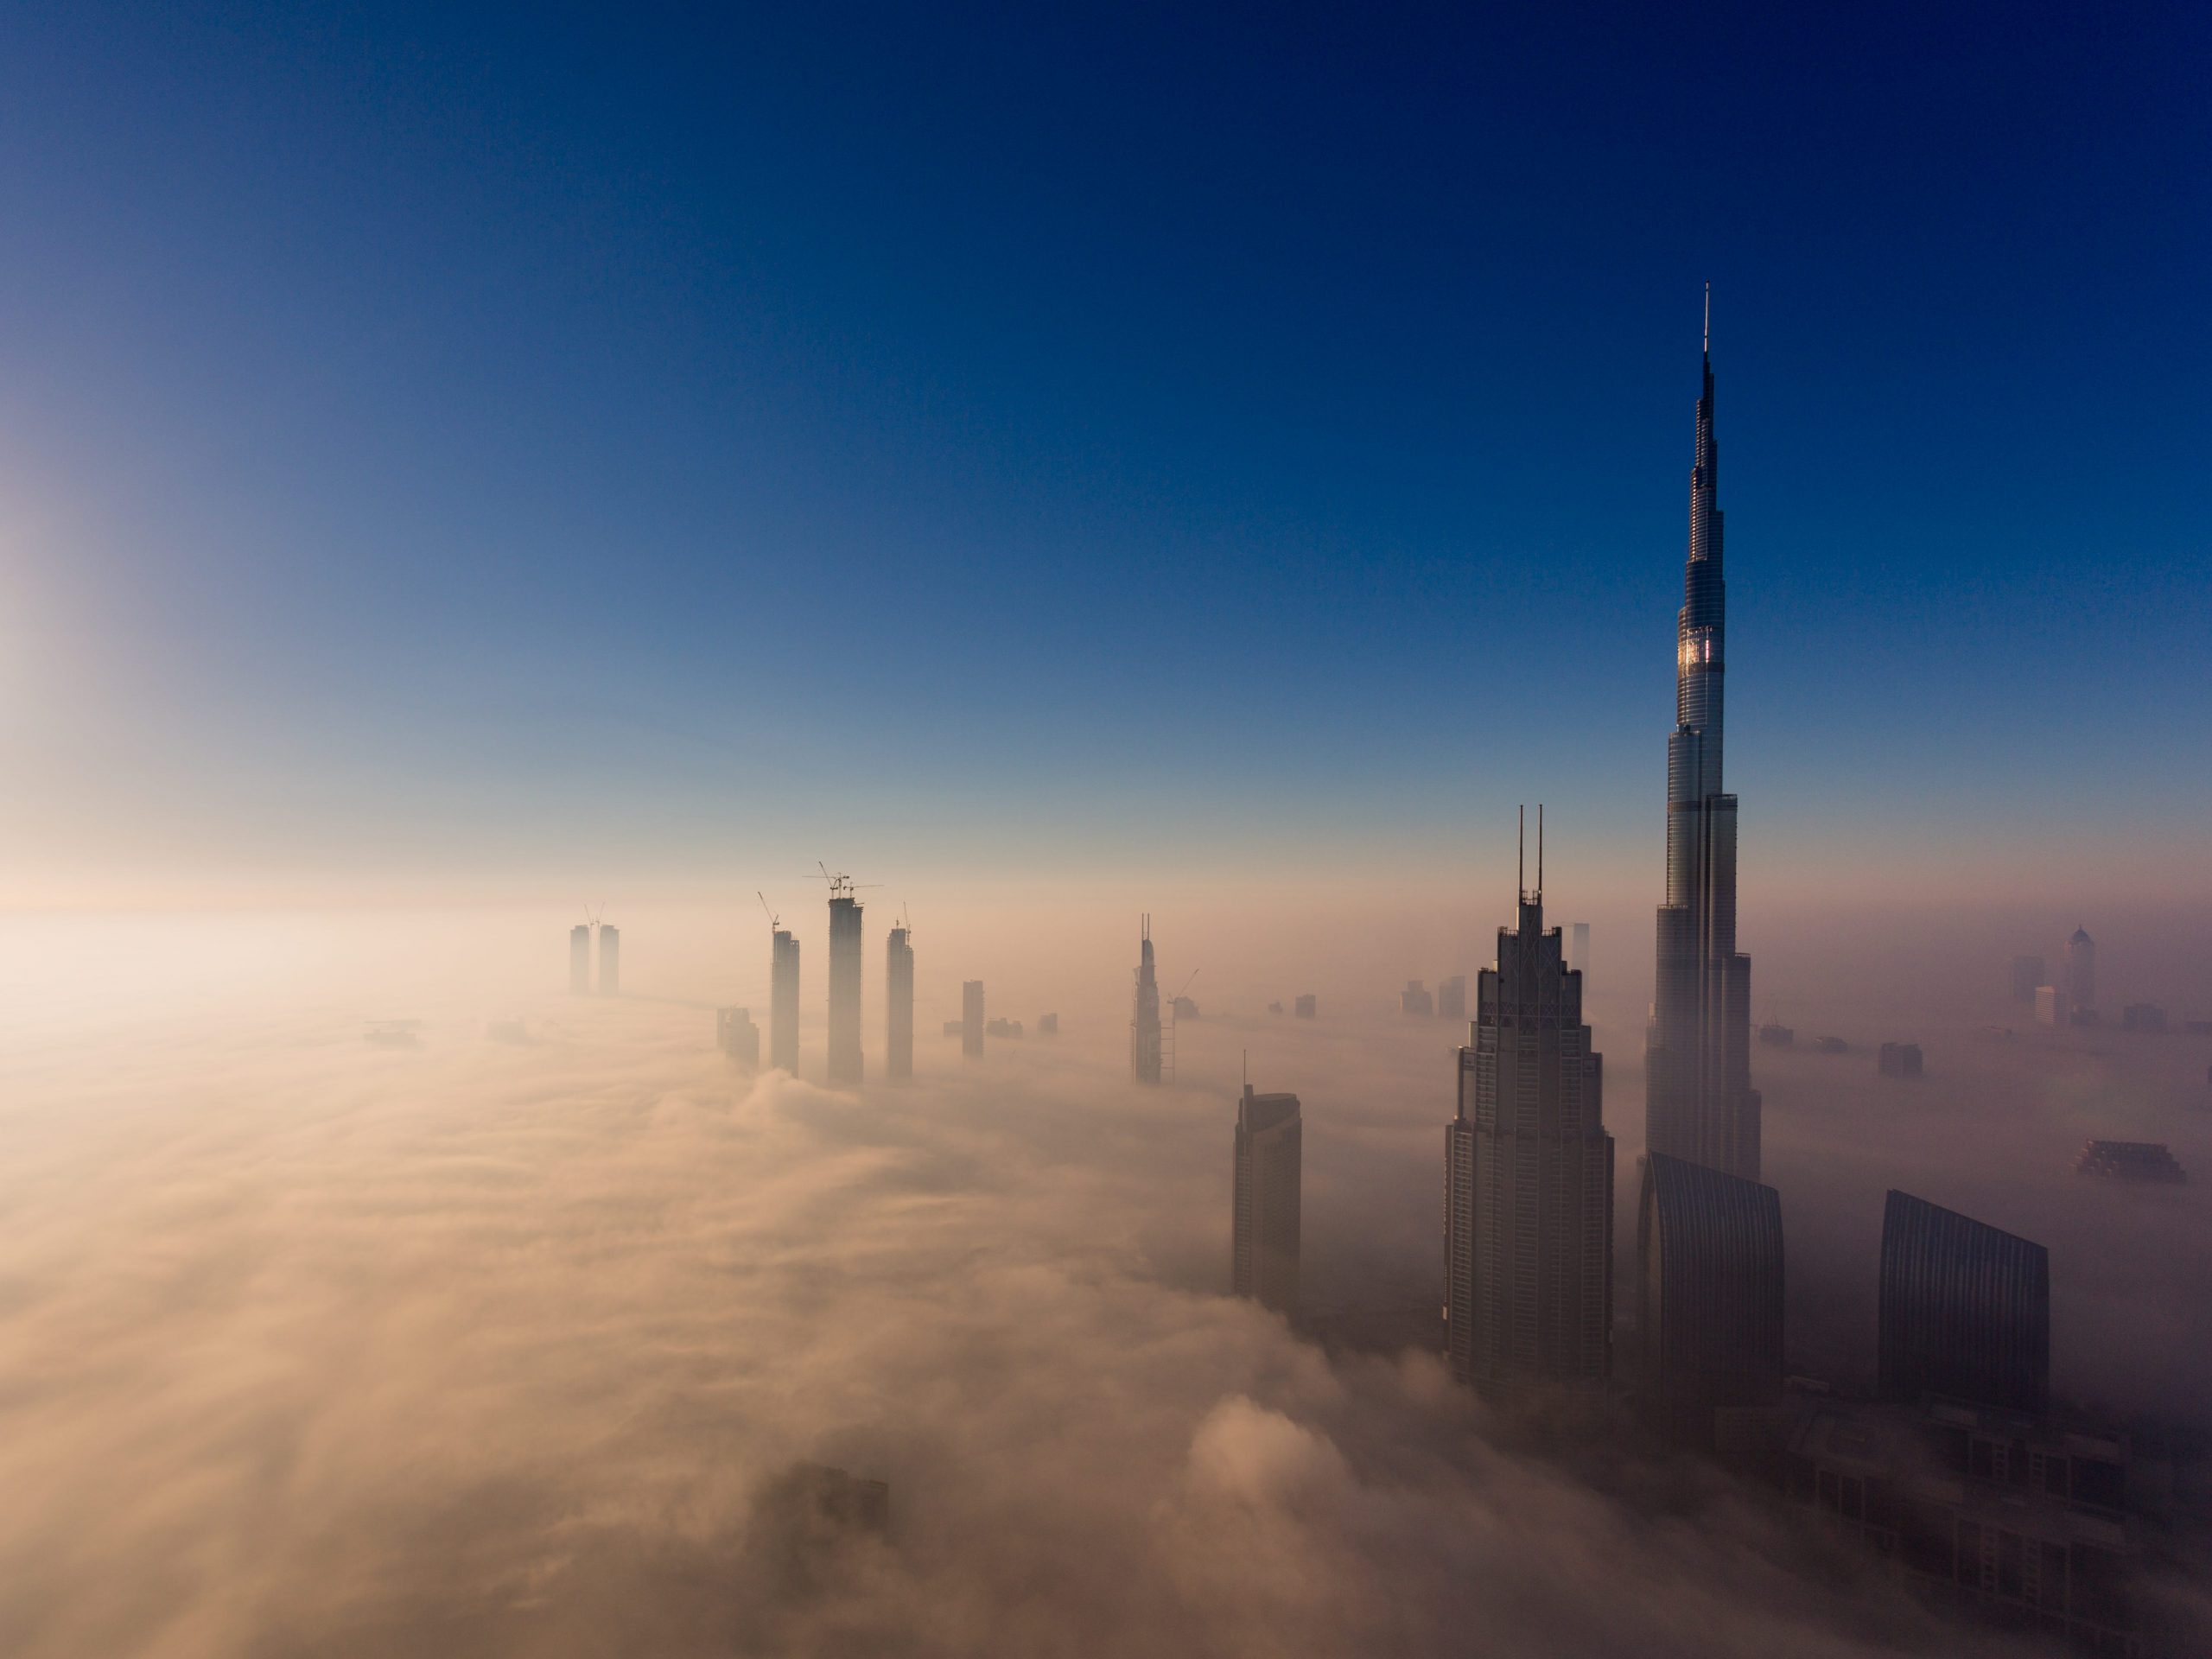 De Burj Khalifa boven de wolken.